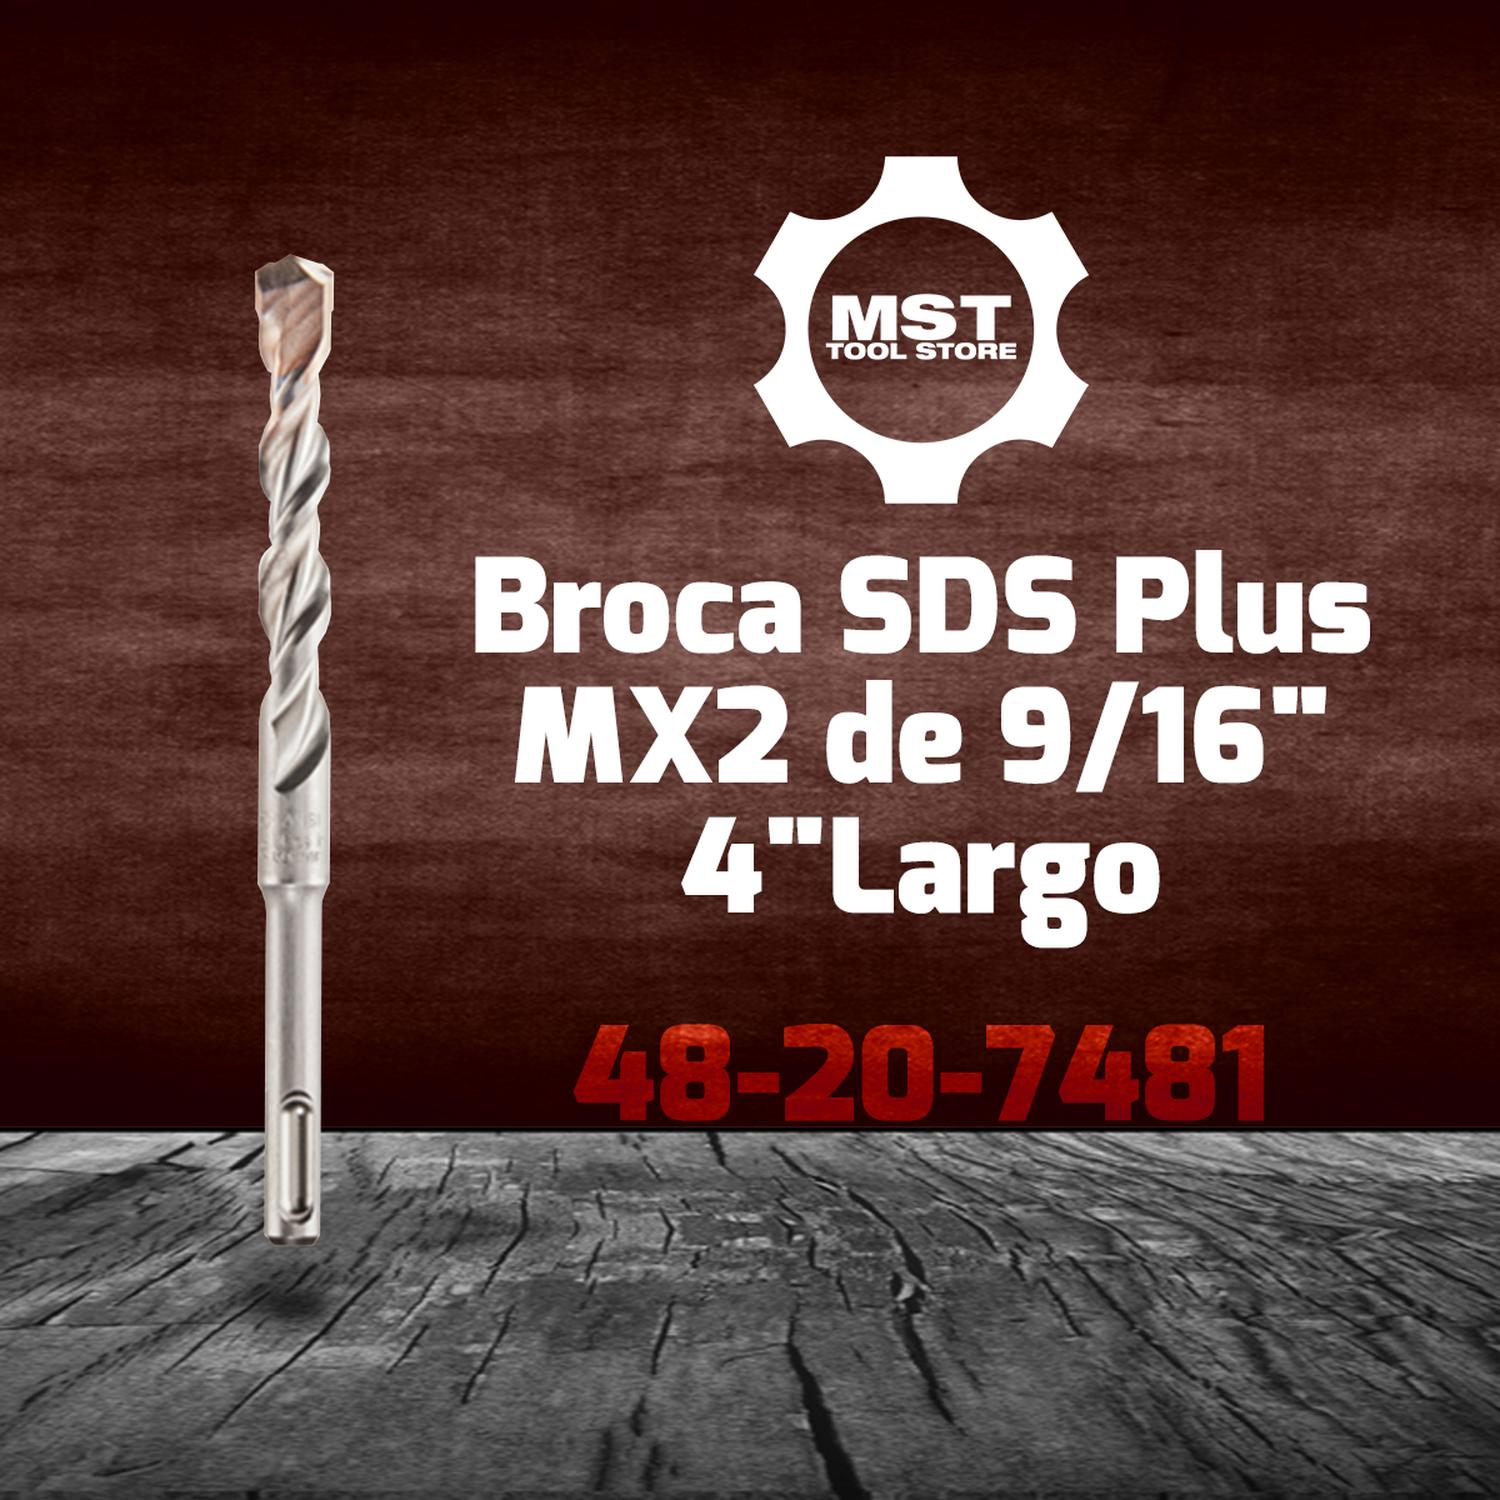 MILWAUKEE 48-20-7481 Broca SDS Plus MX2 de 9/16" 4"Largo